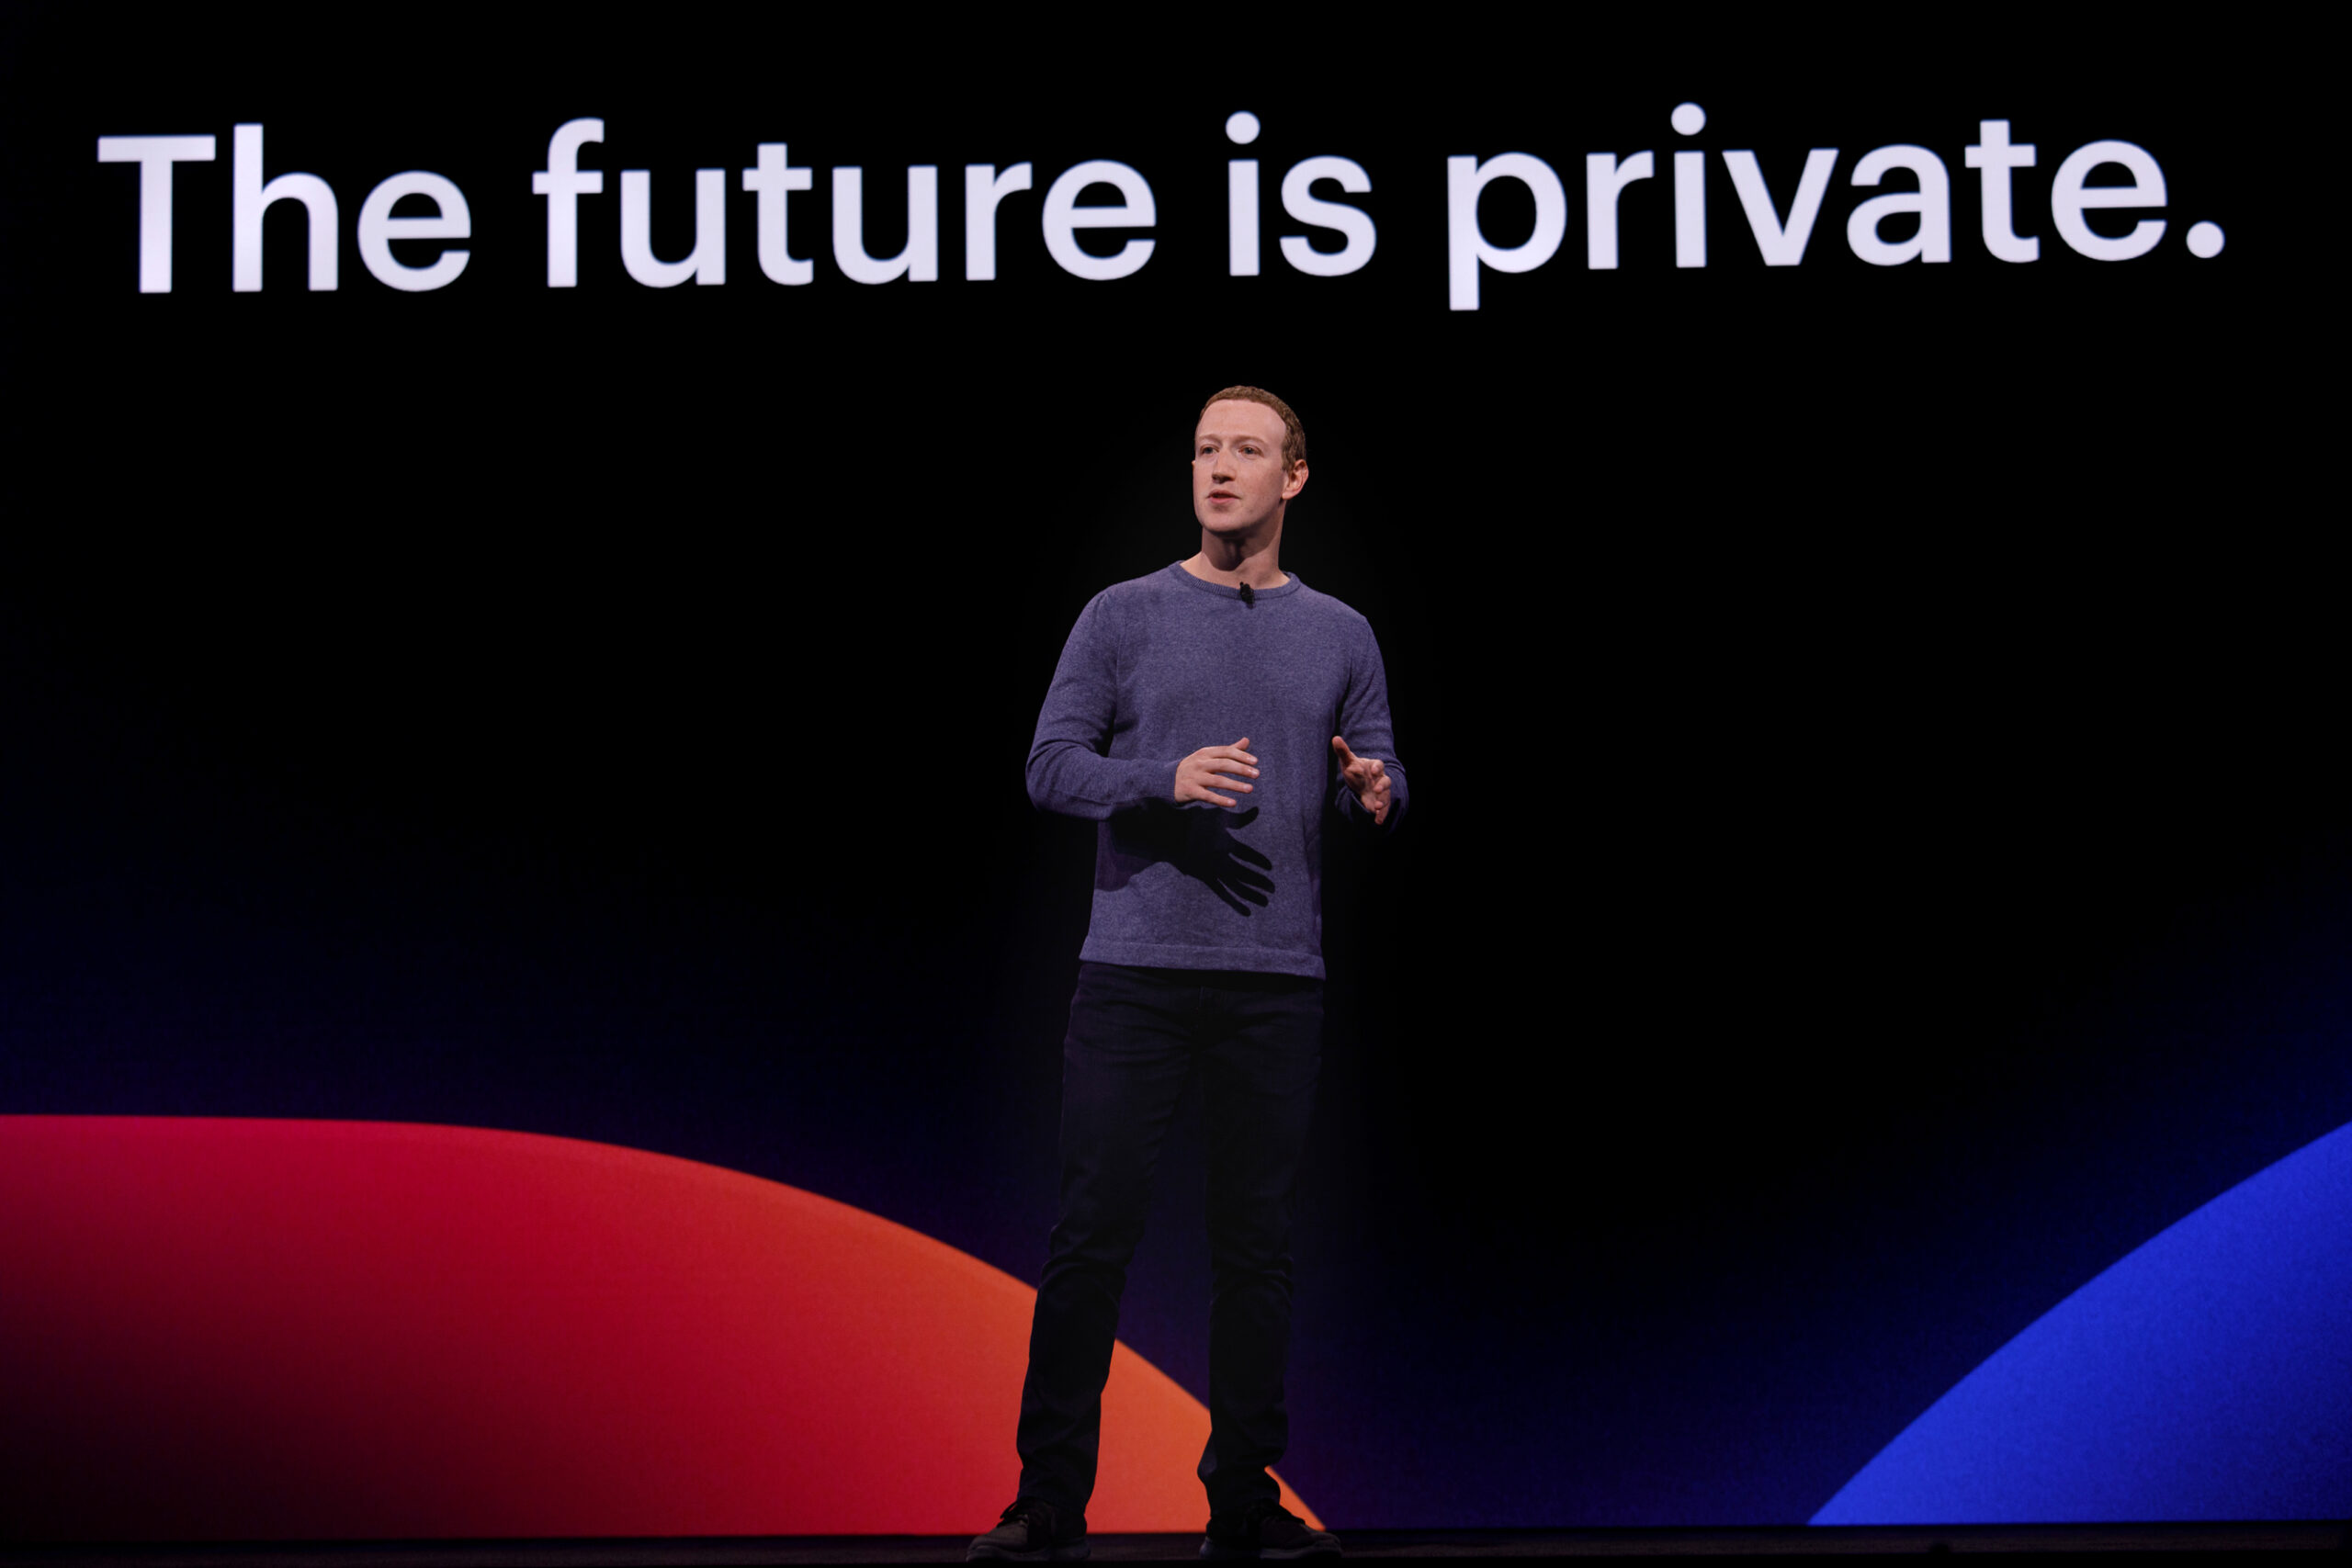 Mark Zuckerberg's keynote speech for Facebook’s 2019 conference